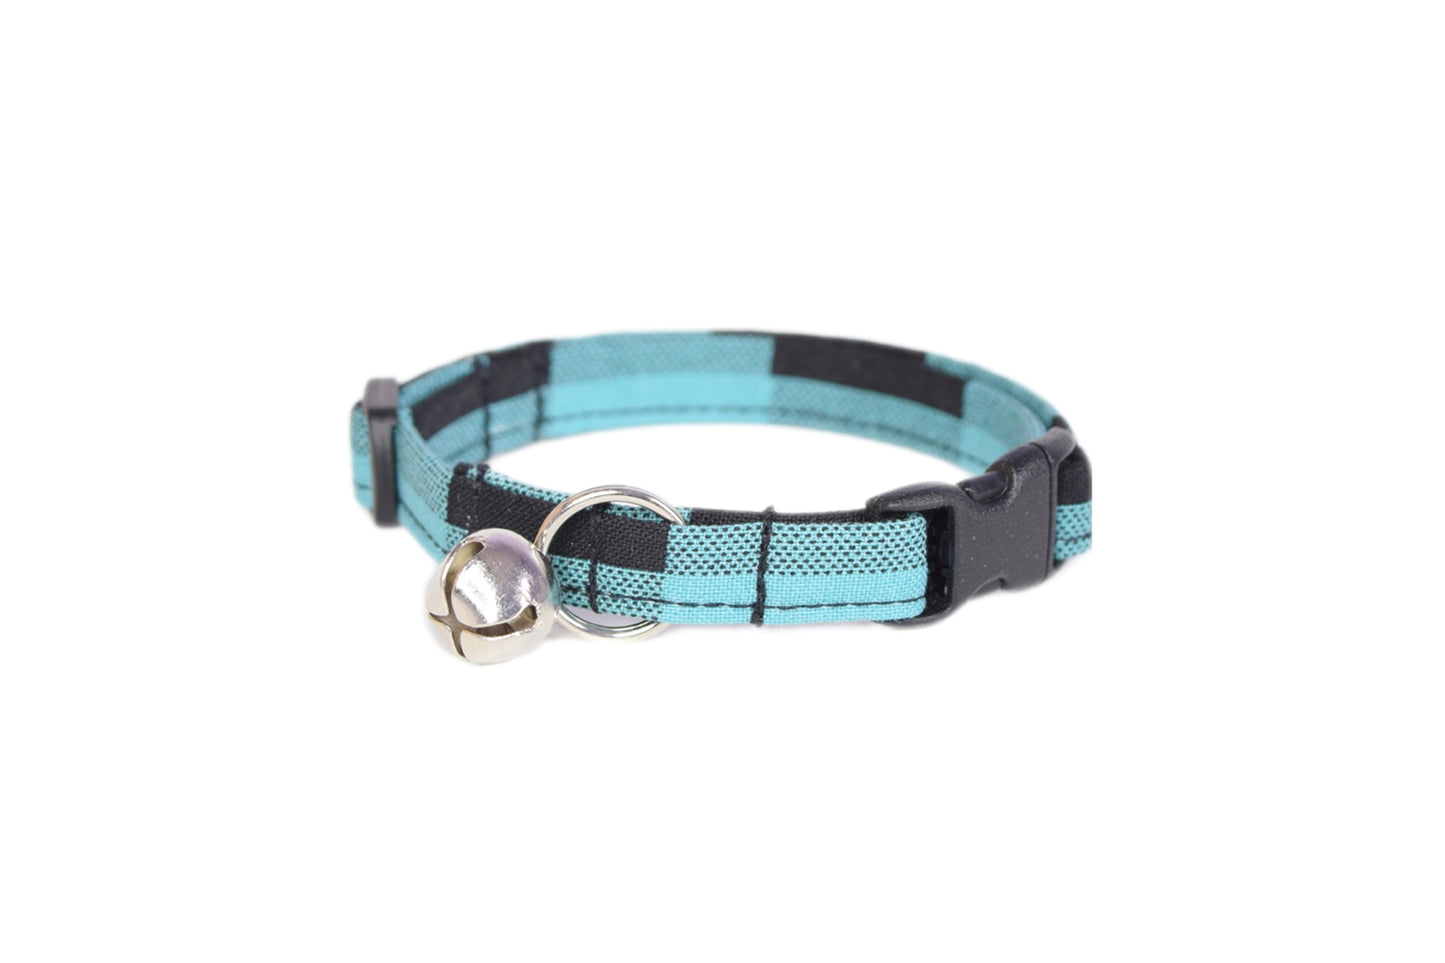 Teal Blue & Black Buffalo Plaid Cat Collar - Buffalo Check Breakaway Cat Collar - Handmade by Kira's Pet Shop